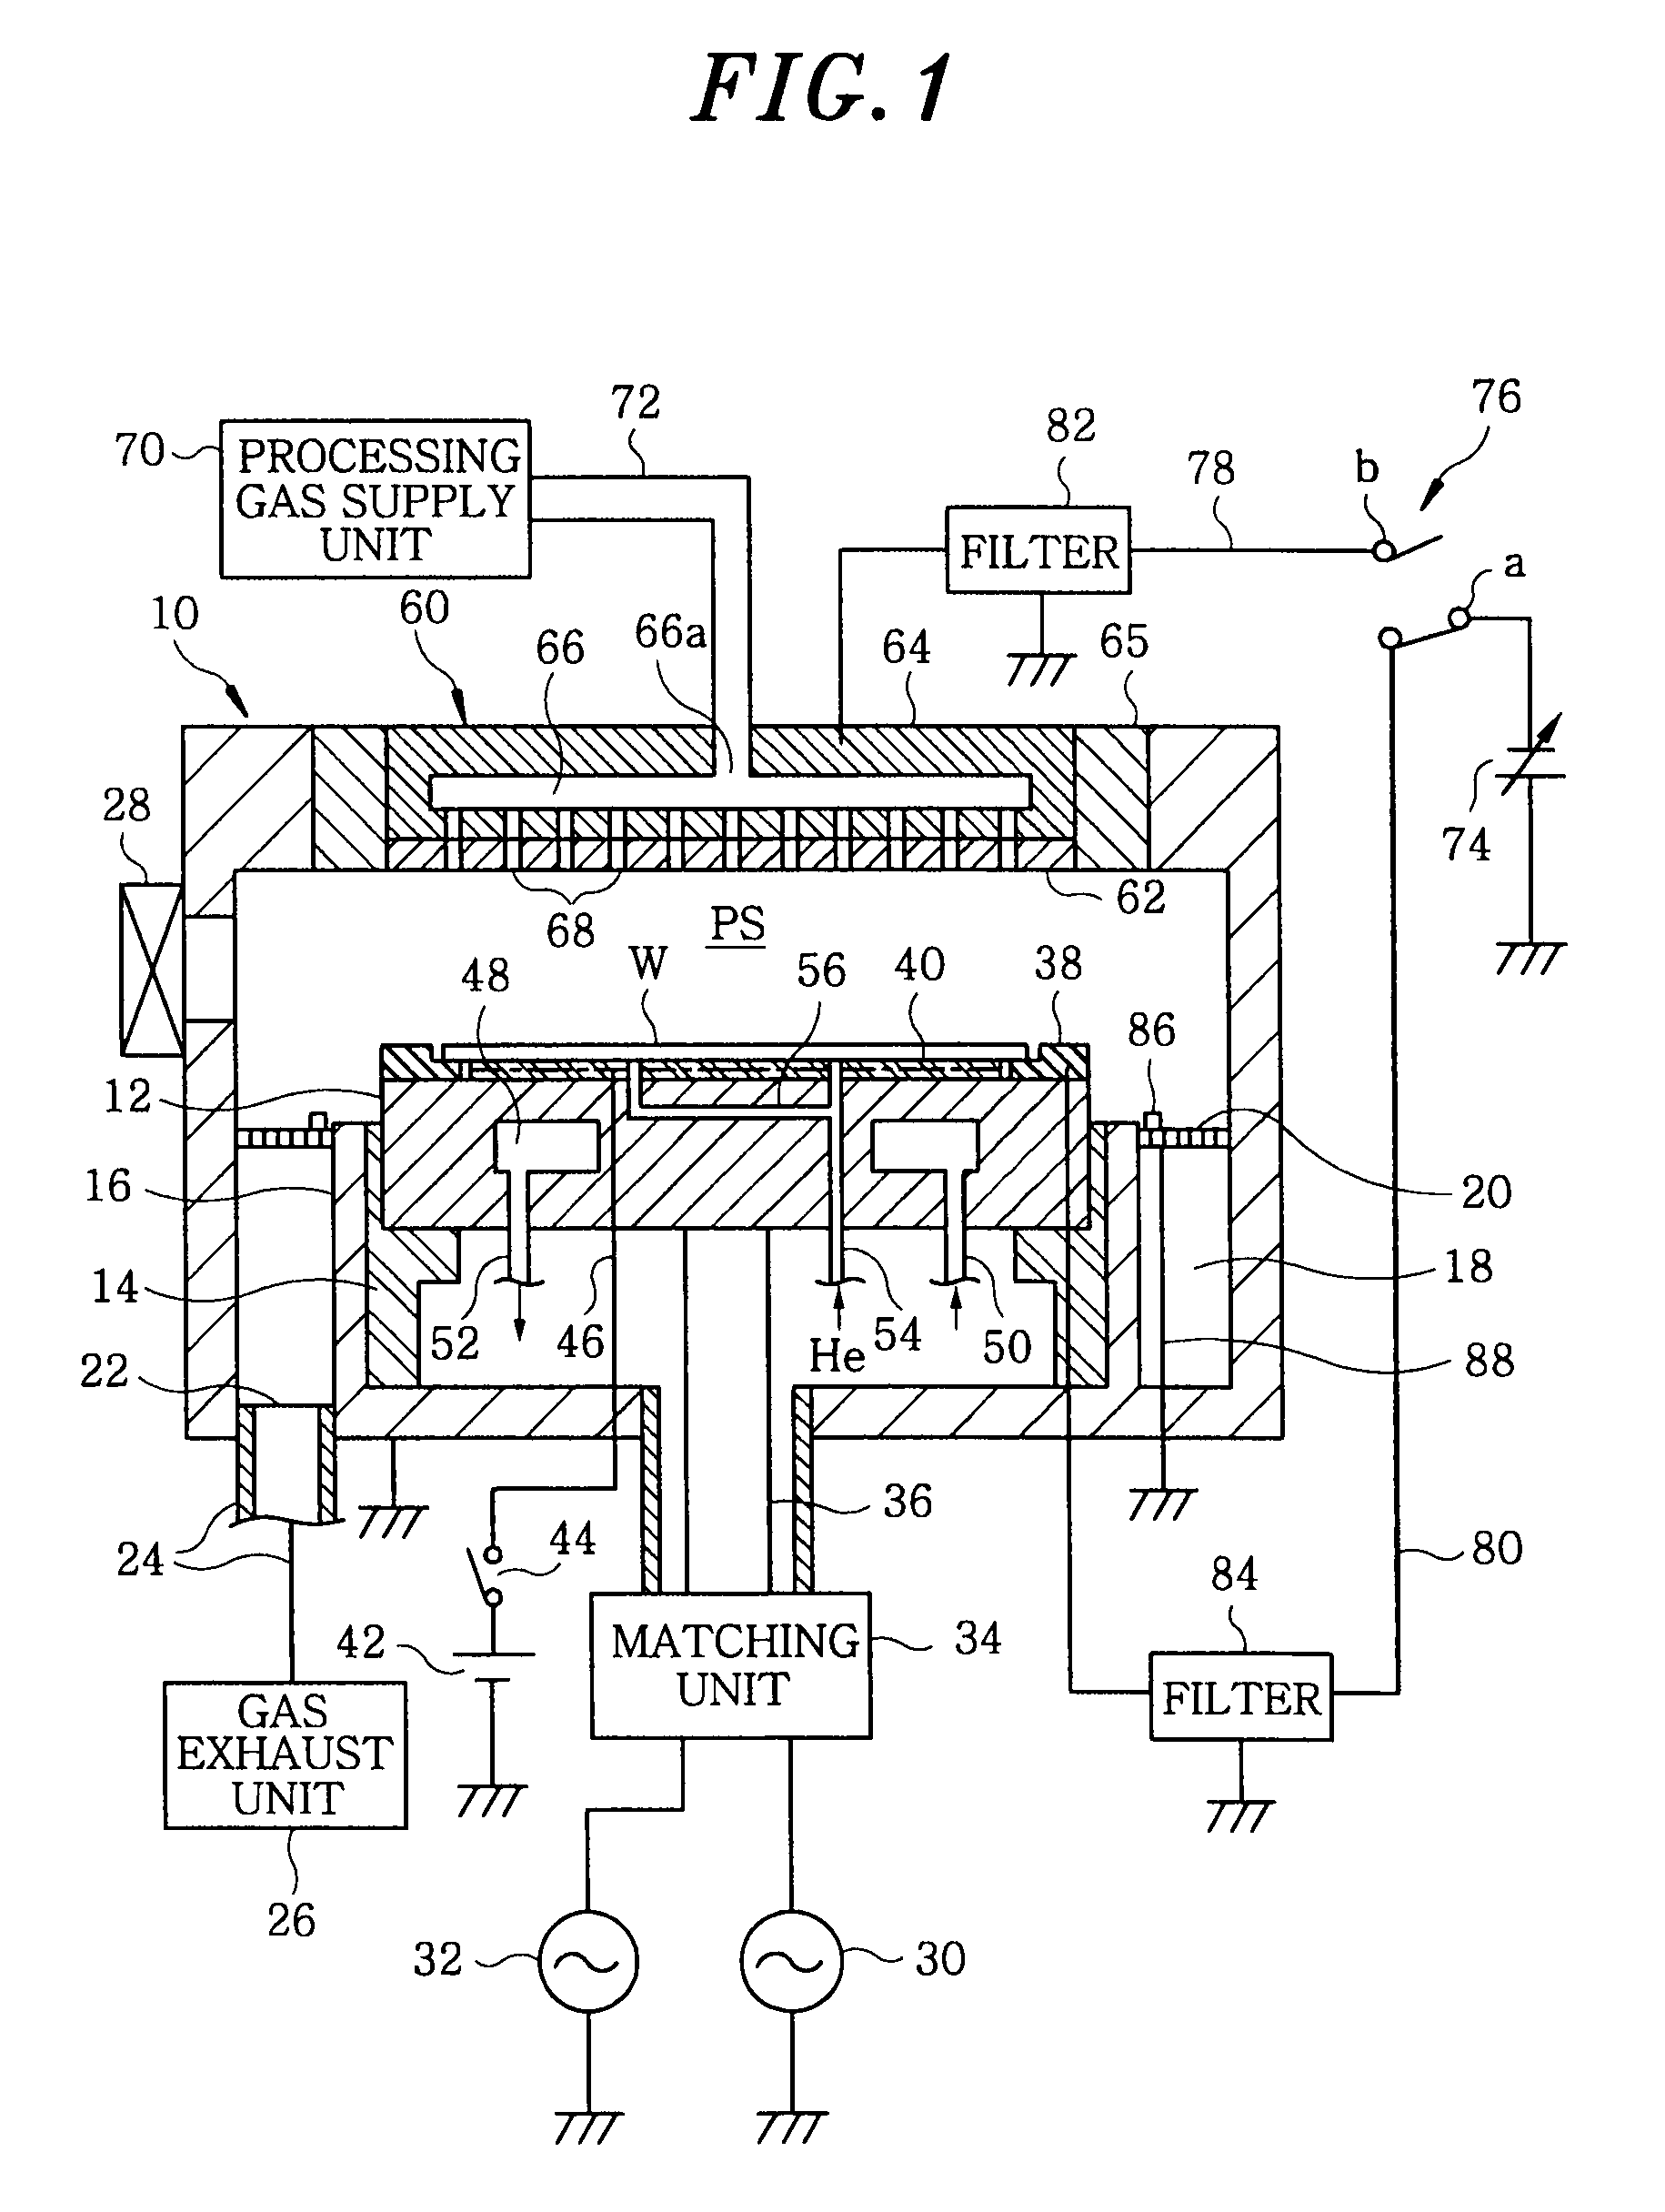 Plasma etching apparatus and method, and computer-readable storage medium